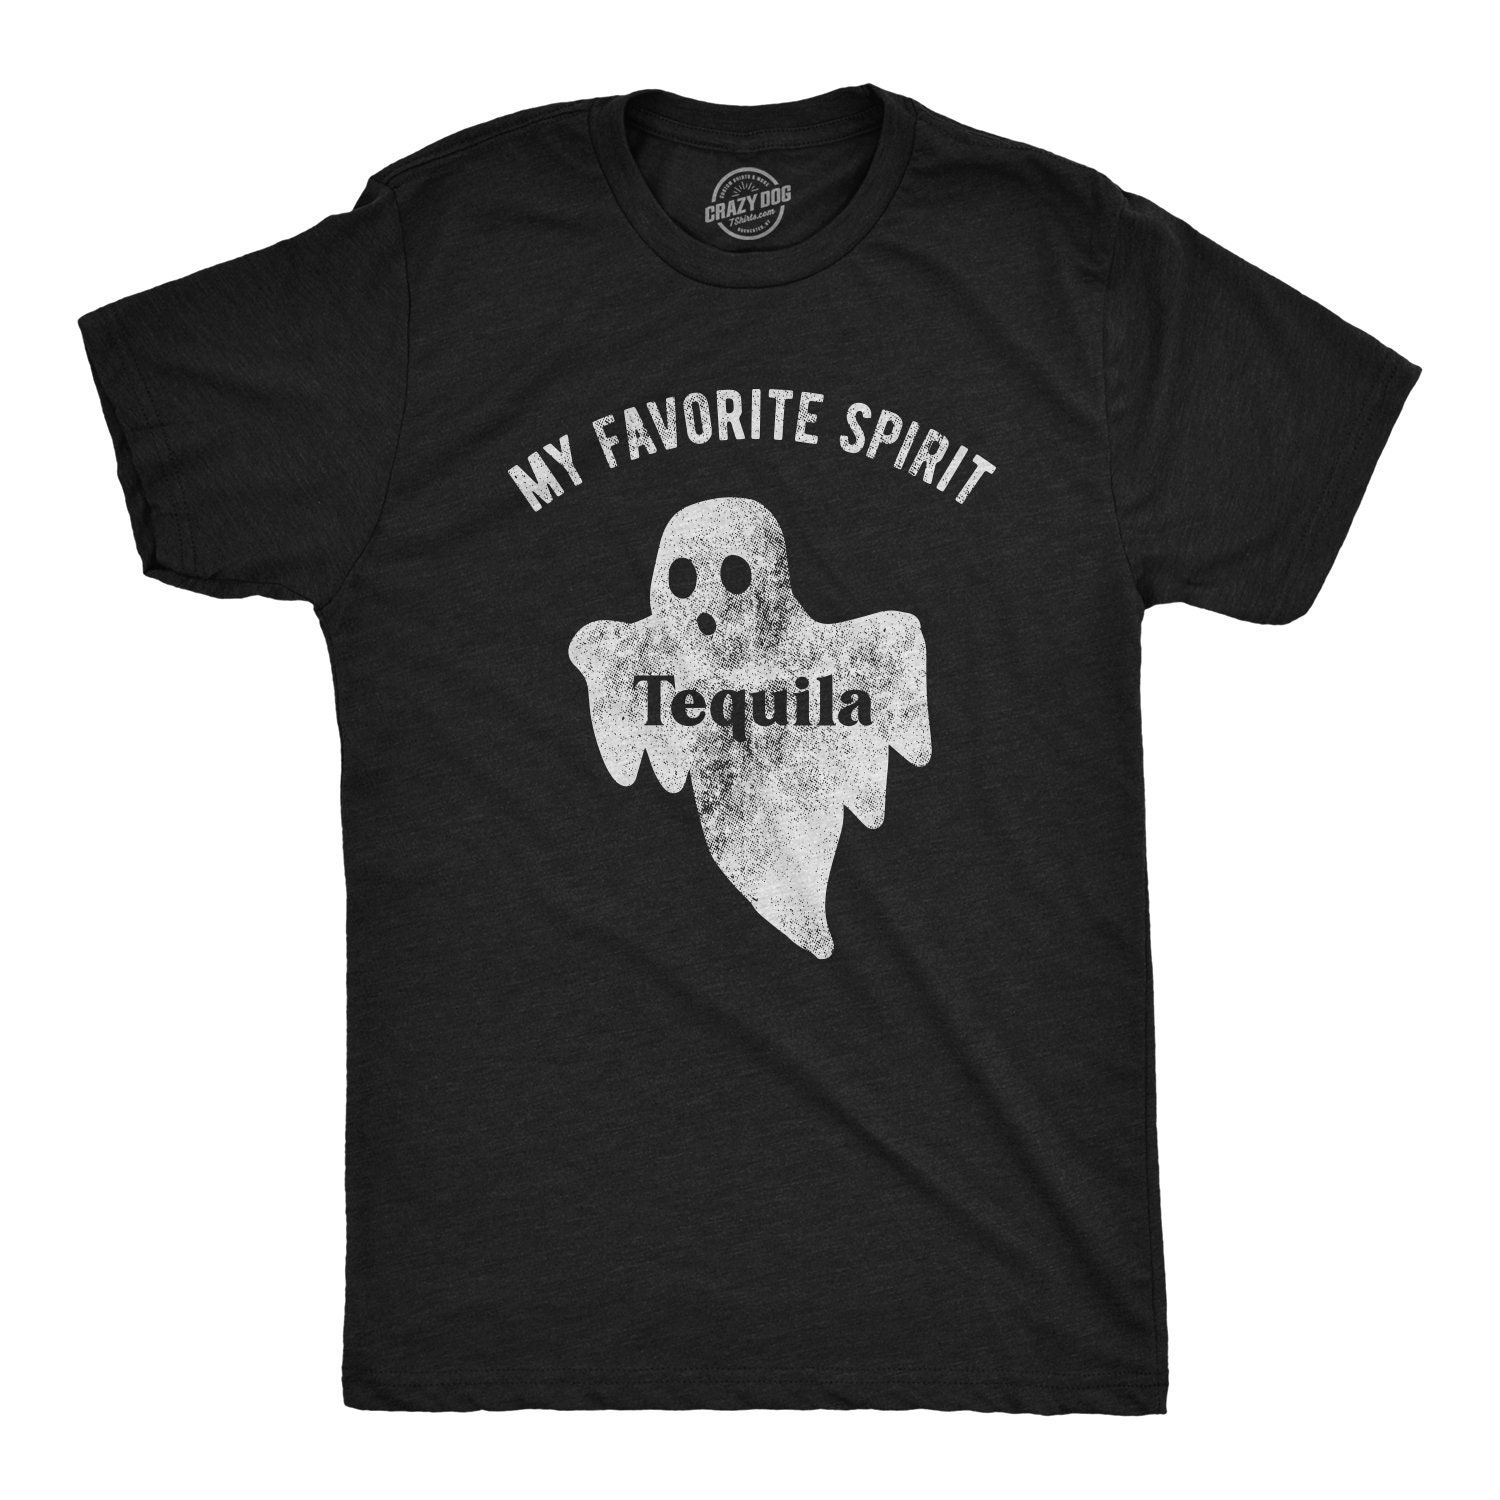 Discover Favorite Spirit Tequila, Halloween T-Shirt